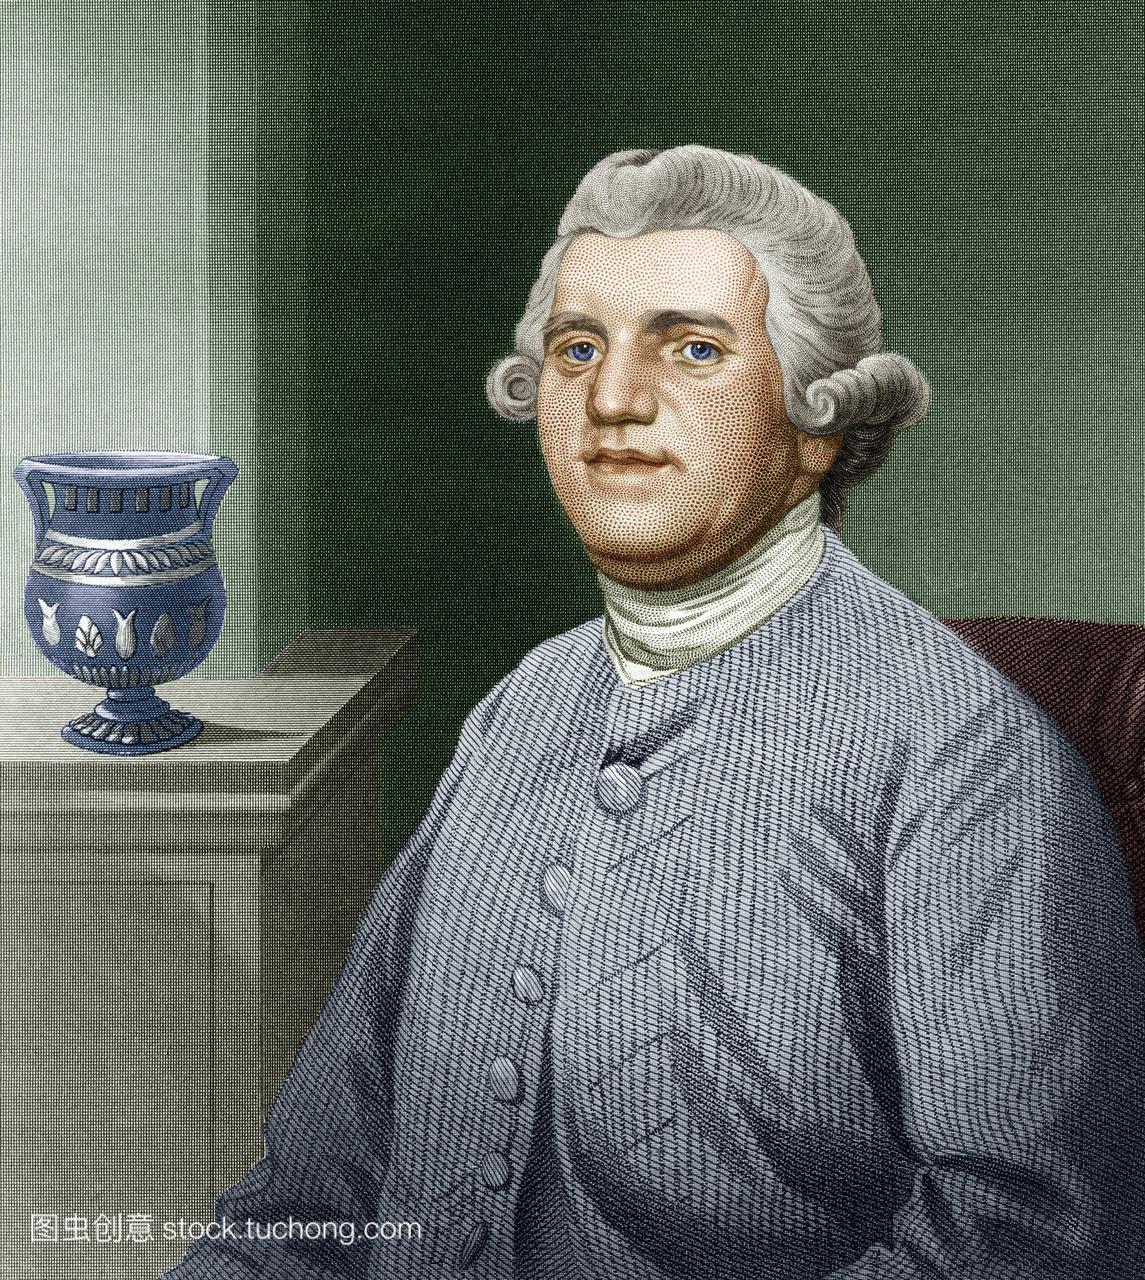 josiahwedgwood1730-1795,英国波特和实业家